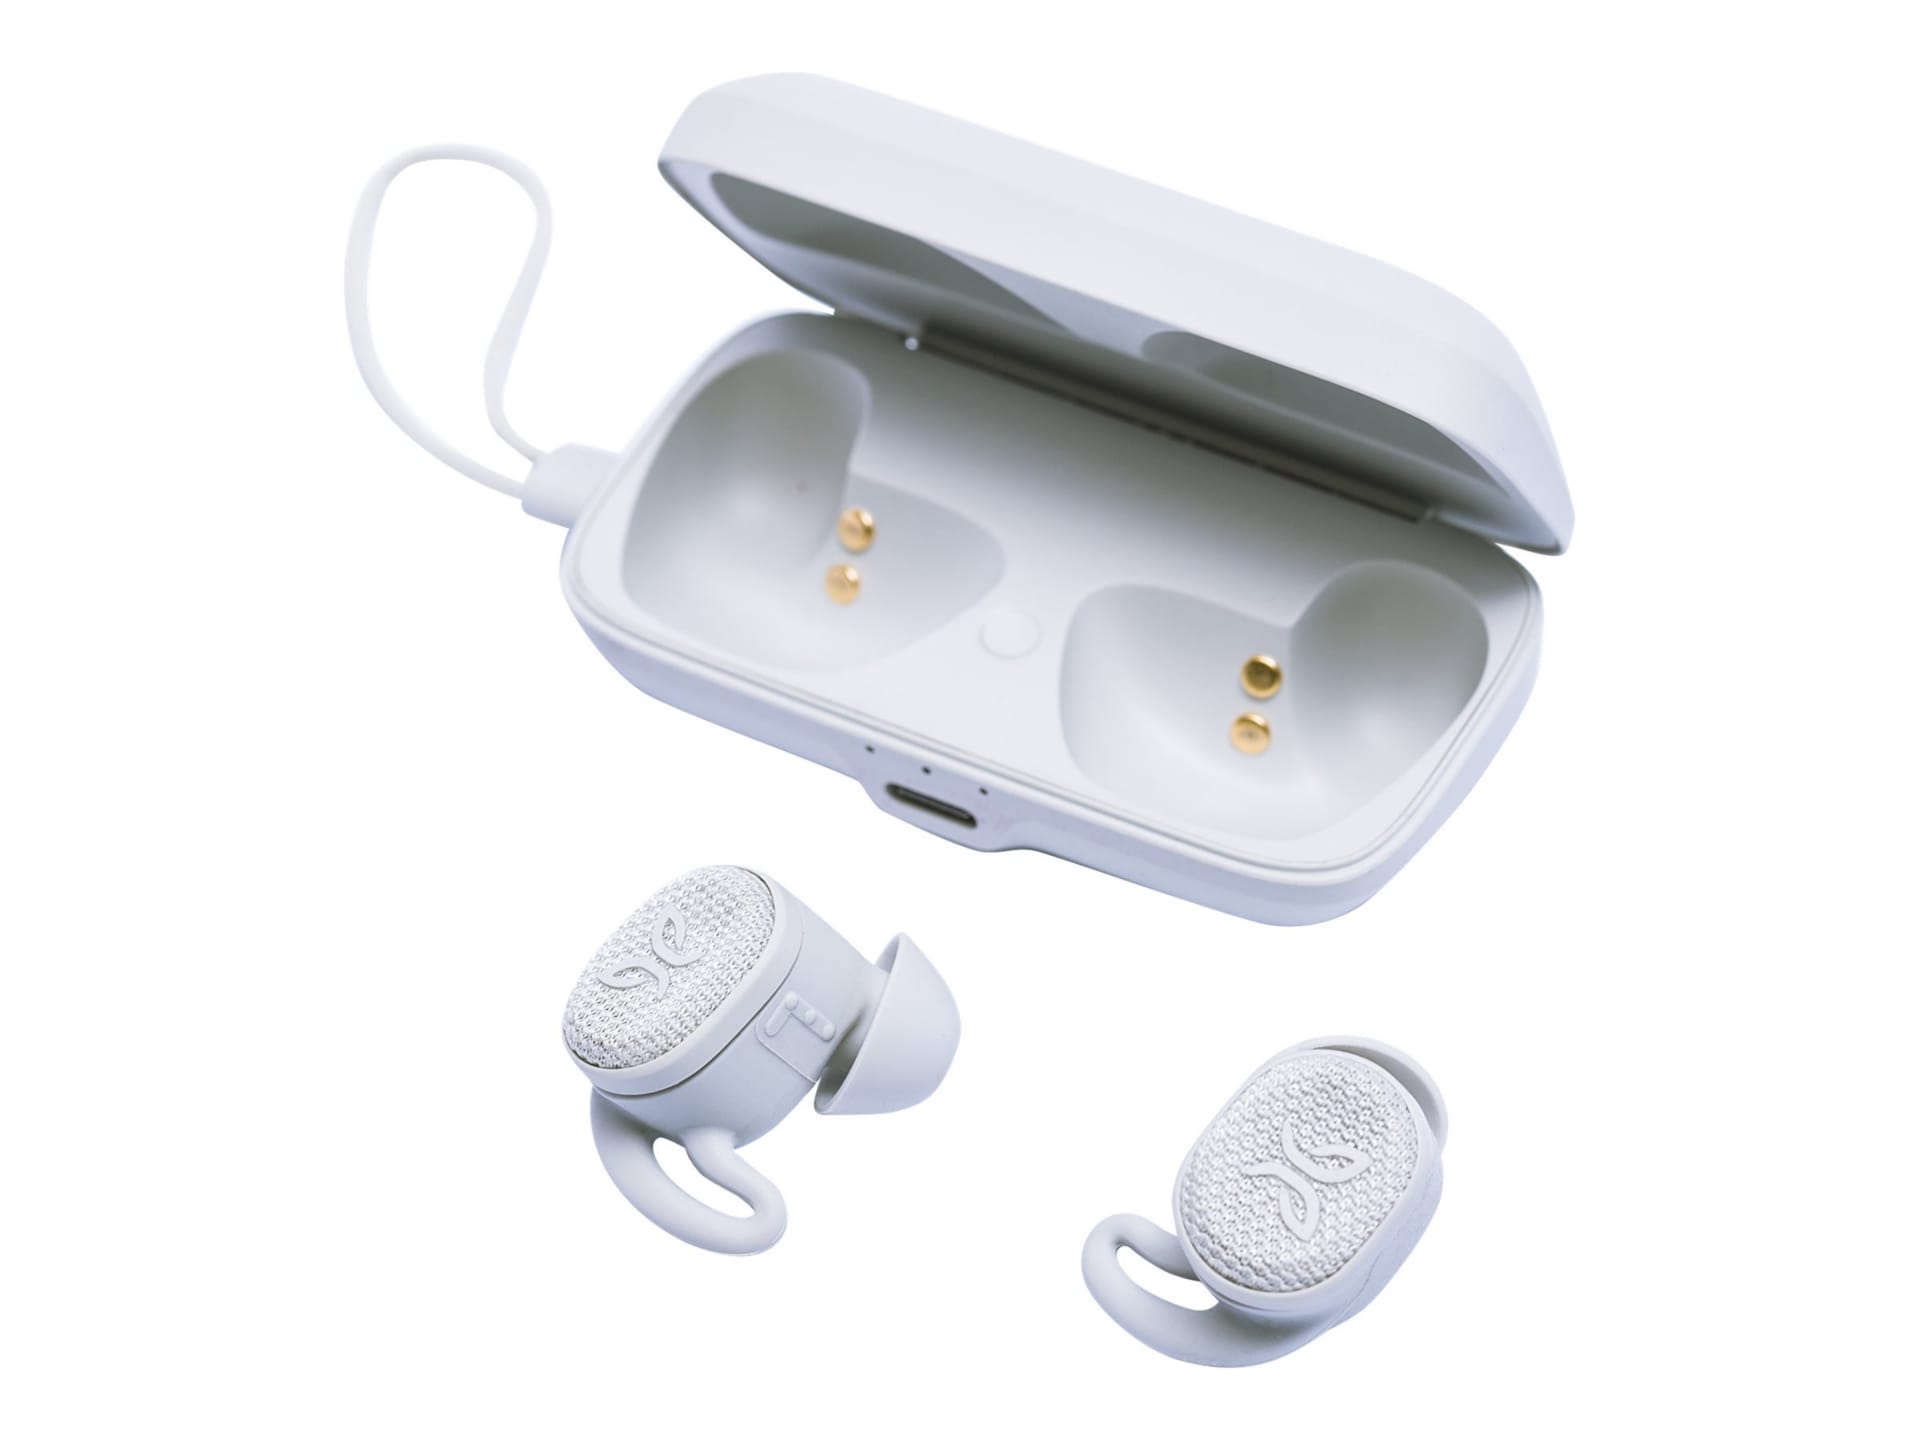 Jaybird Vista 2 - true wireless earphones with mic